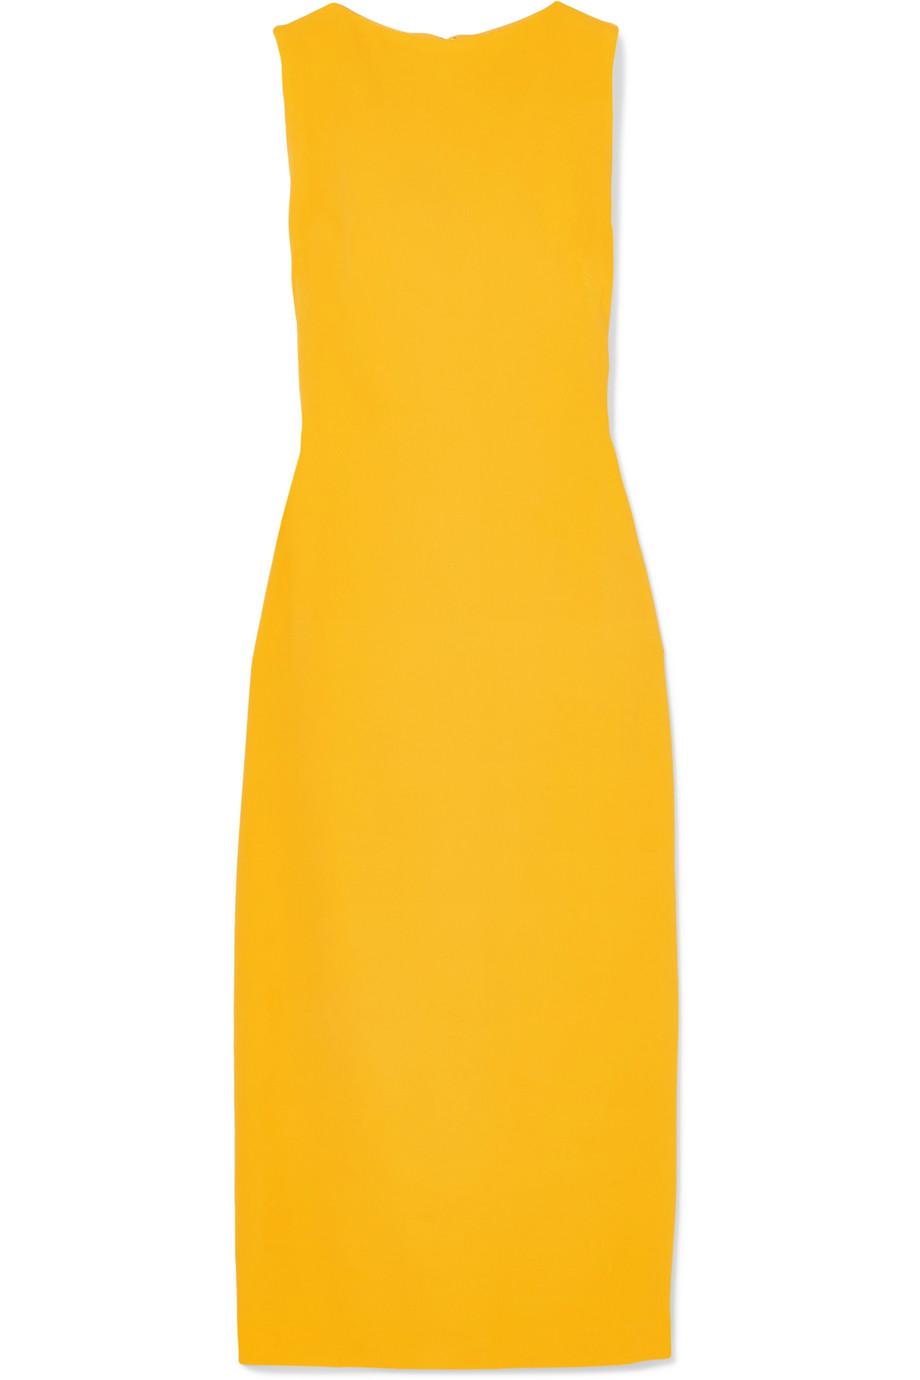 Brandon Maxwell Crepe Midi Dress in Yellow | Lyst